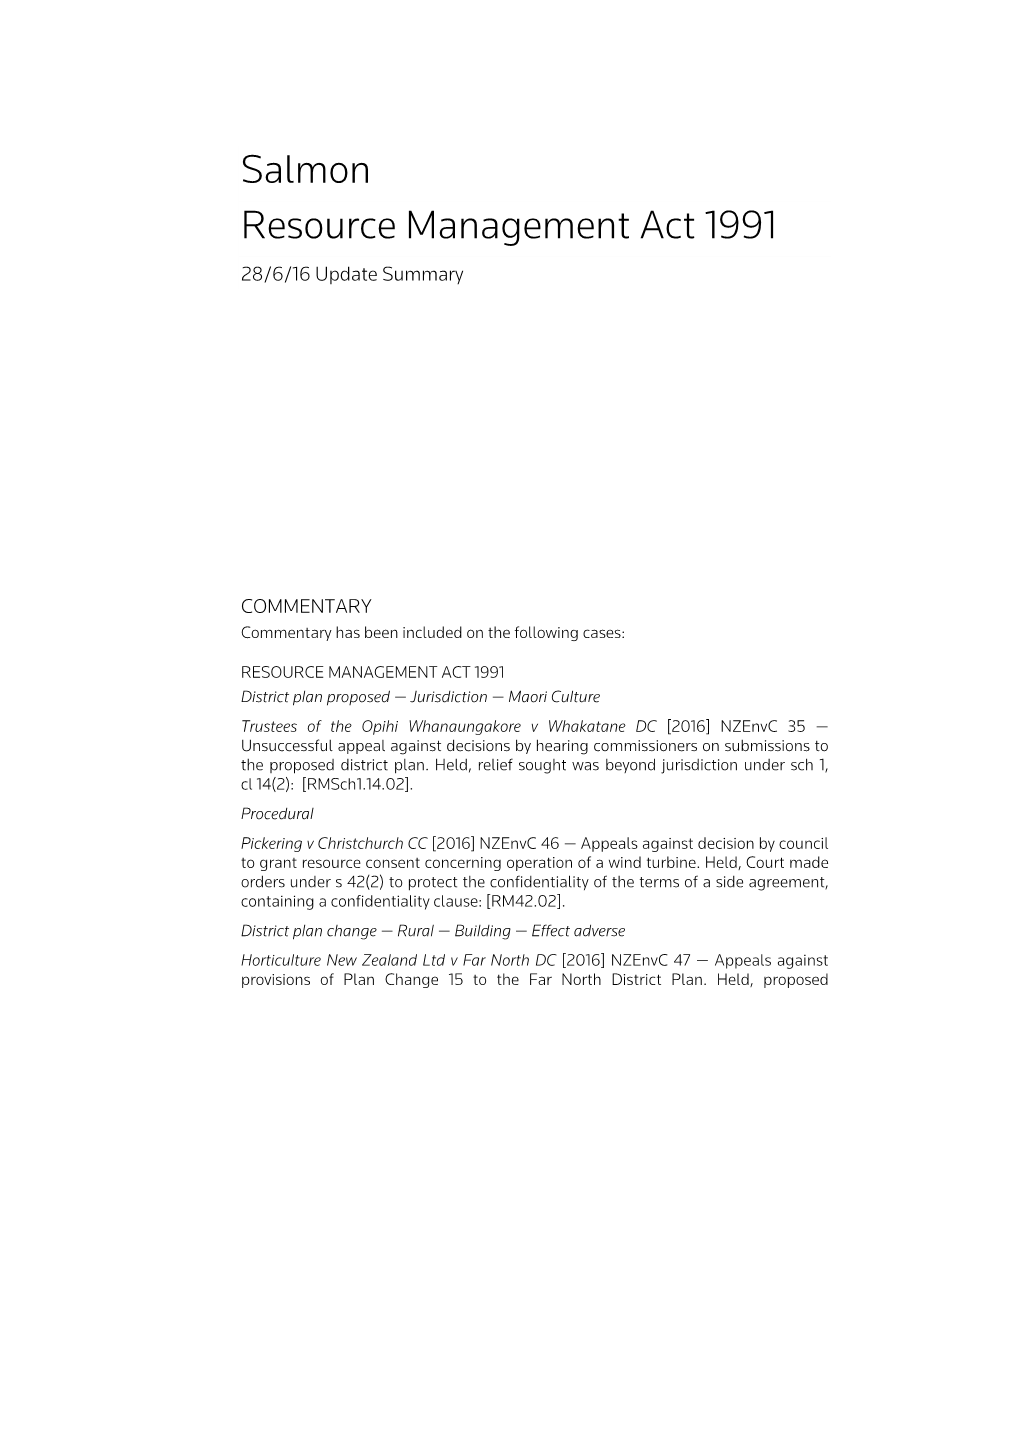 Salmon Resource Management Act 1991 28/6/16 Update Summary